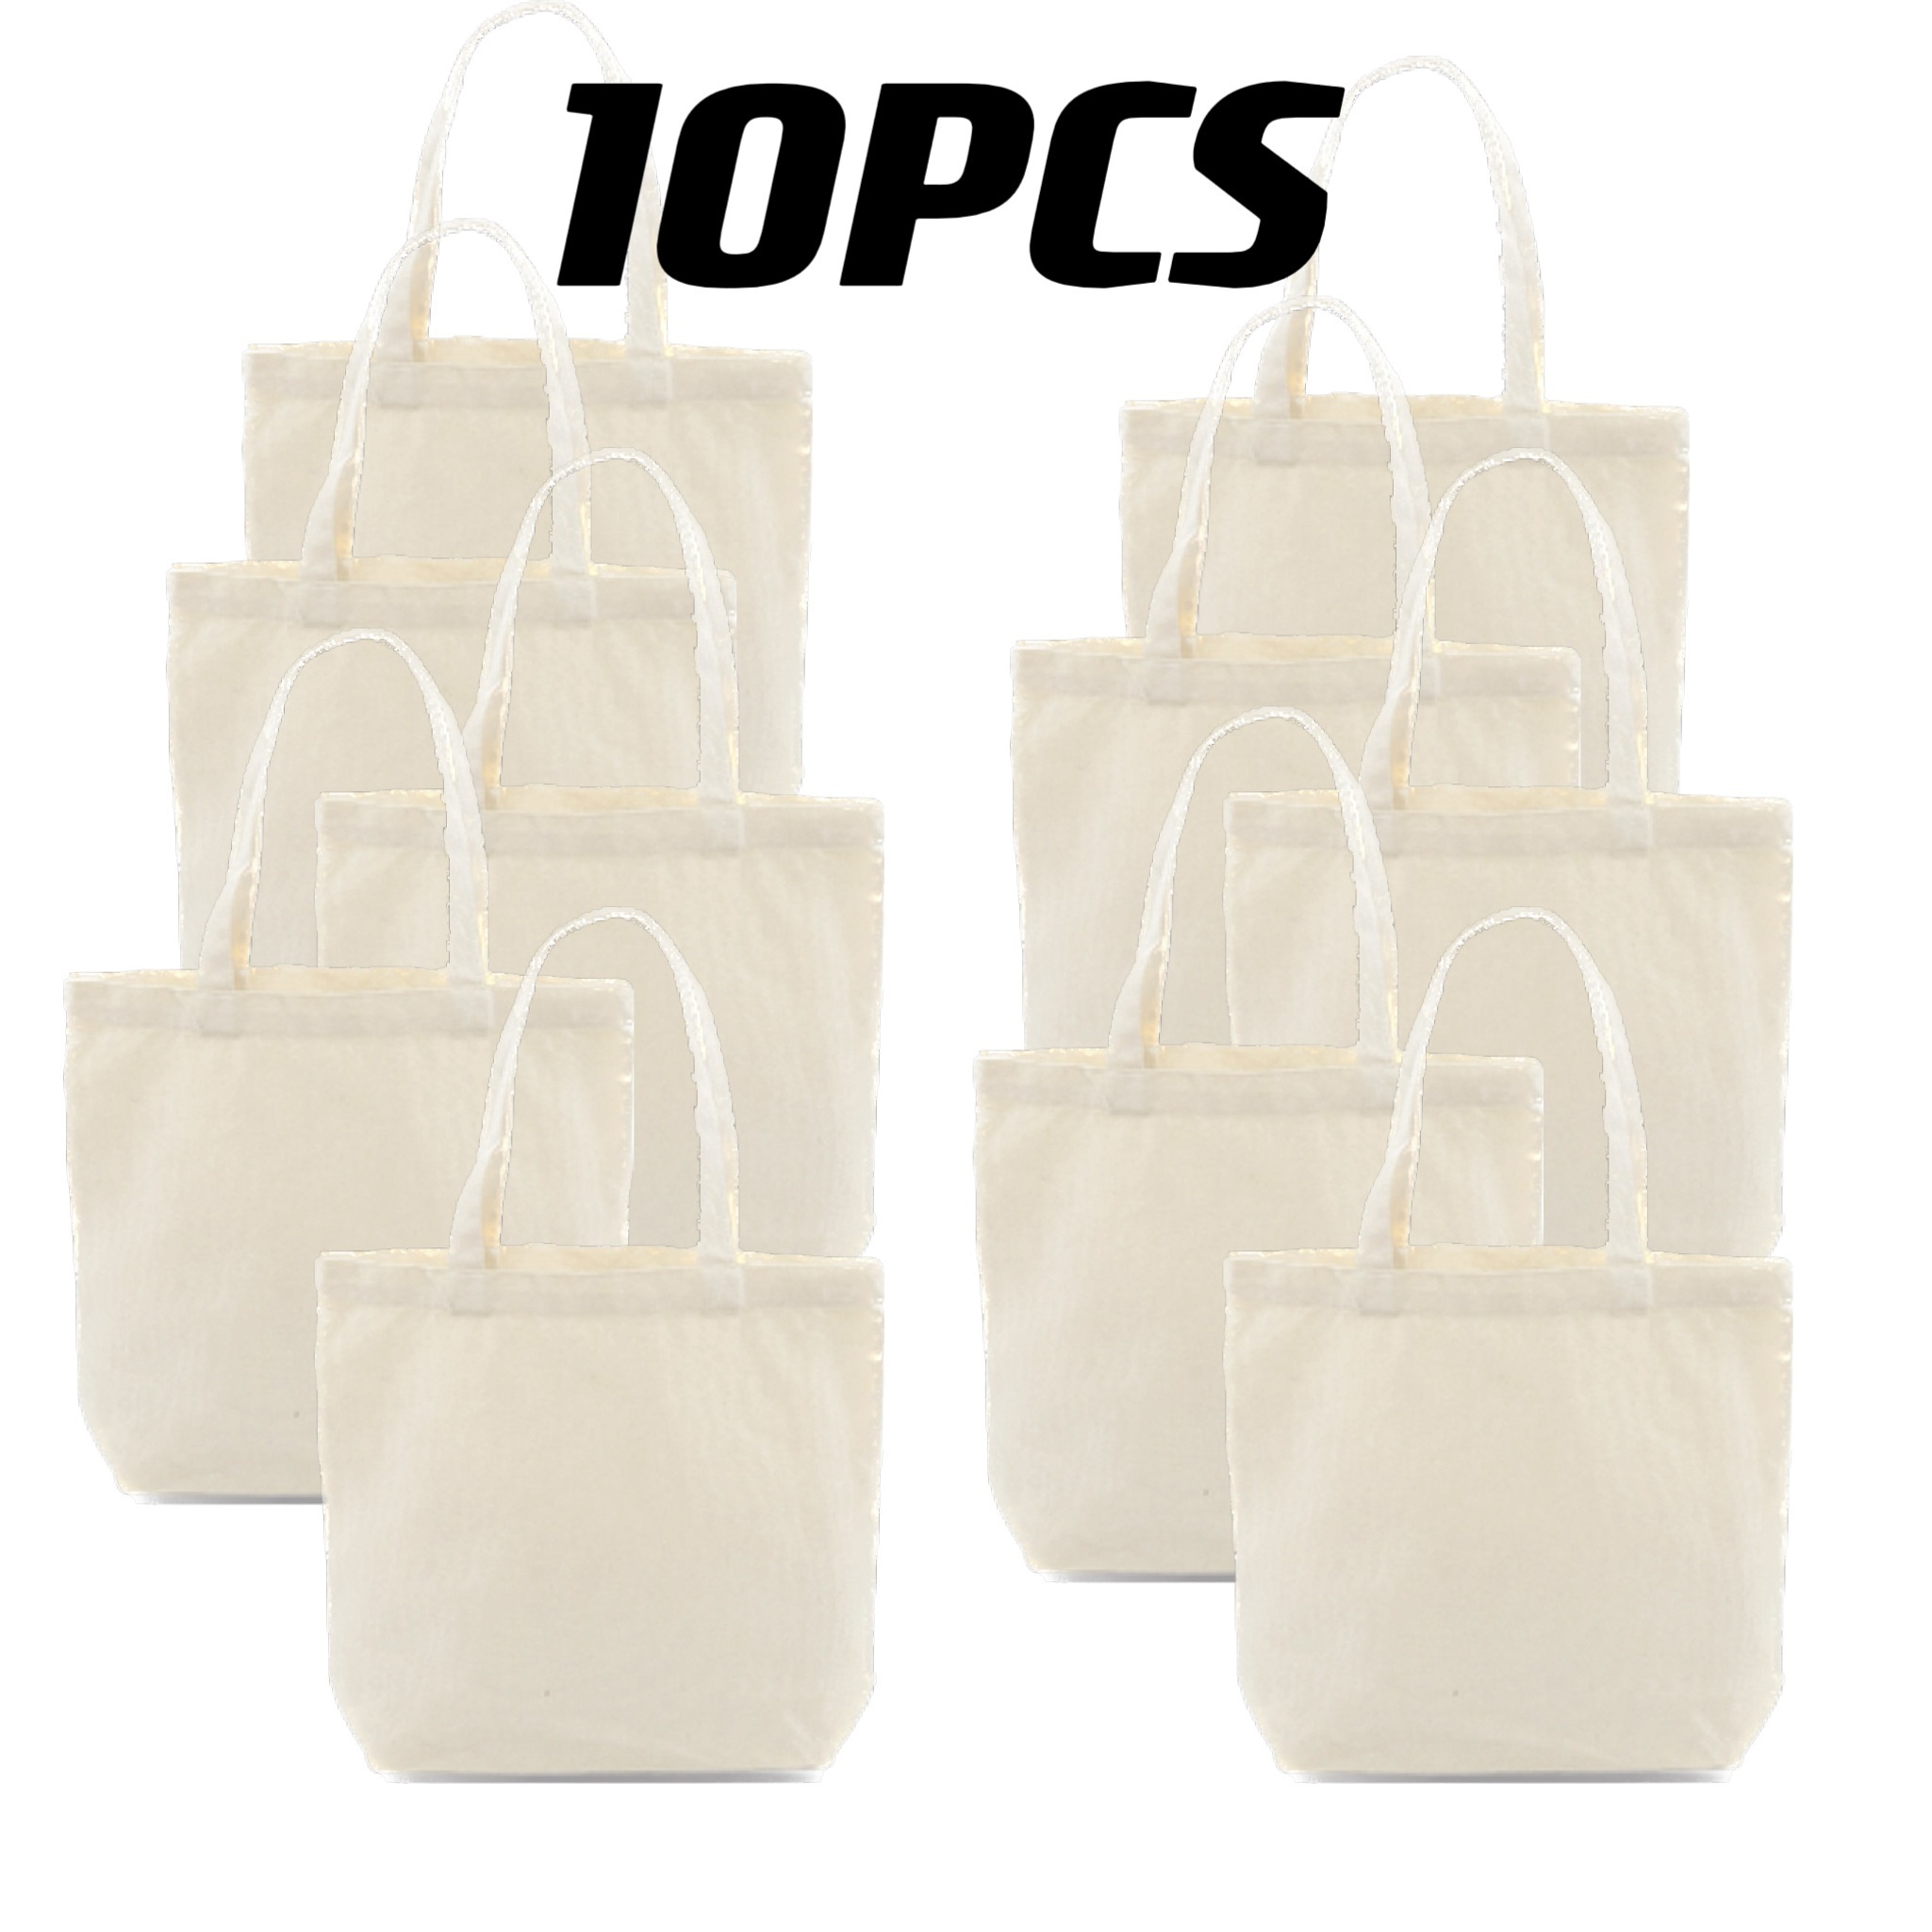 1 Pieces Canvas Tote Bags Handbag Washable Reusable Student Tote Bag Blank  DIY Original Design Bag, Food Shopping Bag, Gift Bags, Book Bags